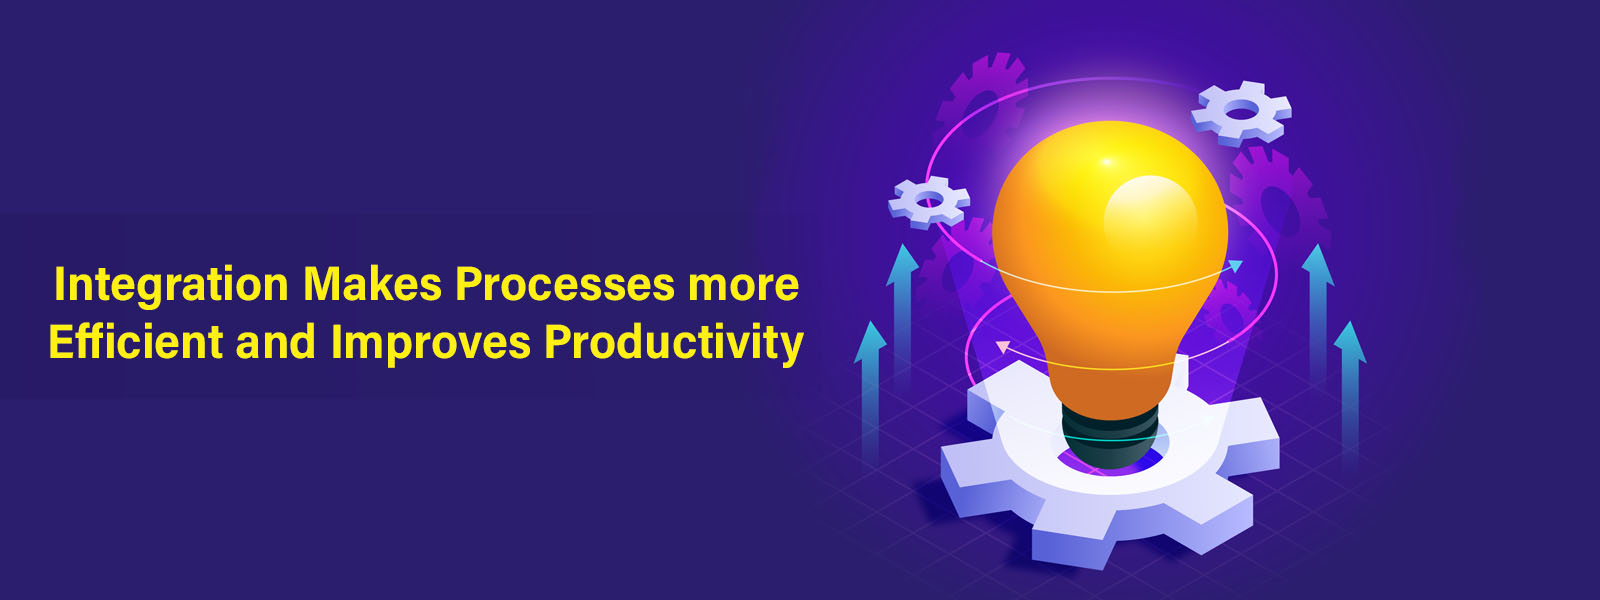 integaration makes processes more efficient ad improves productivity